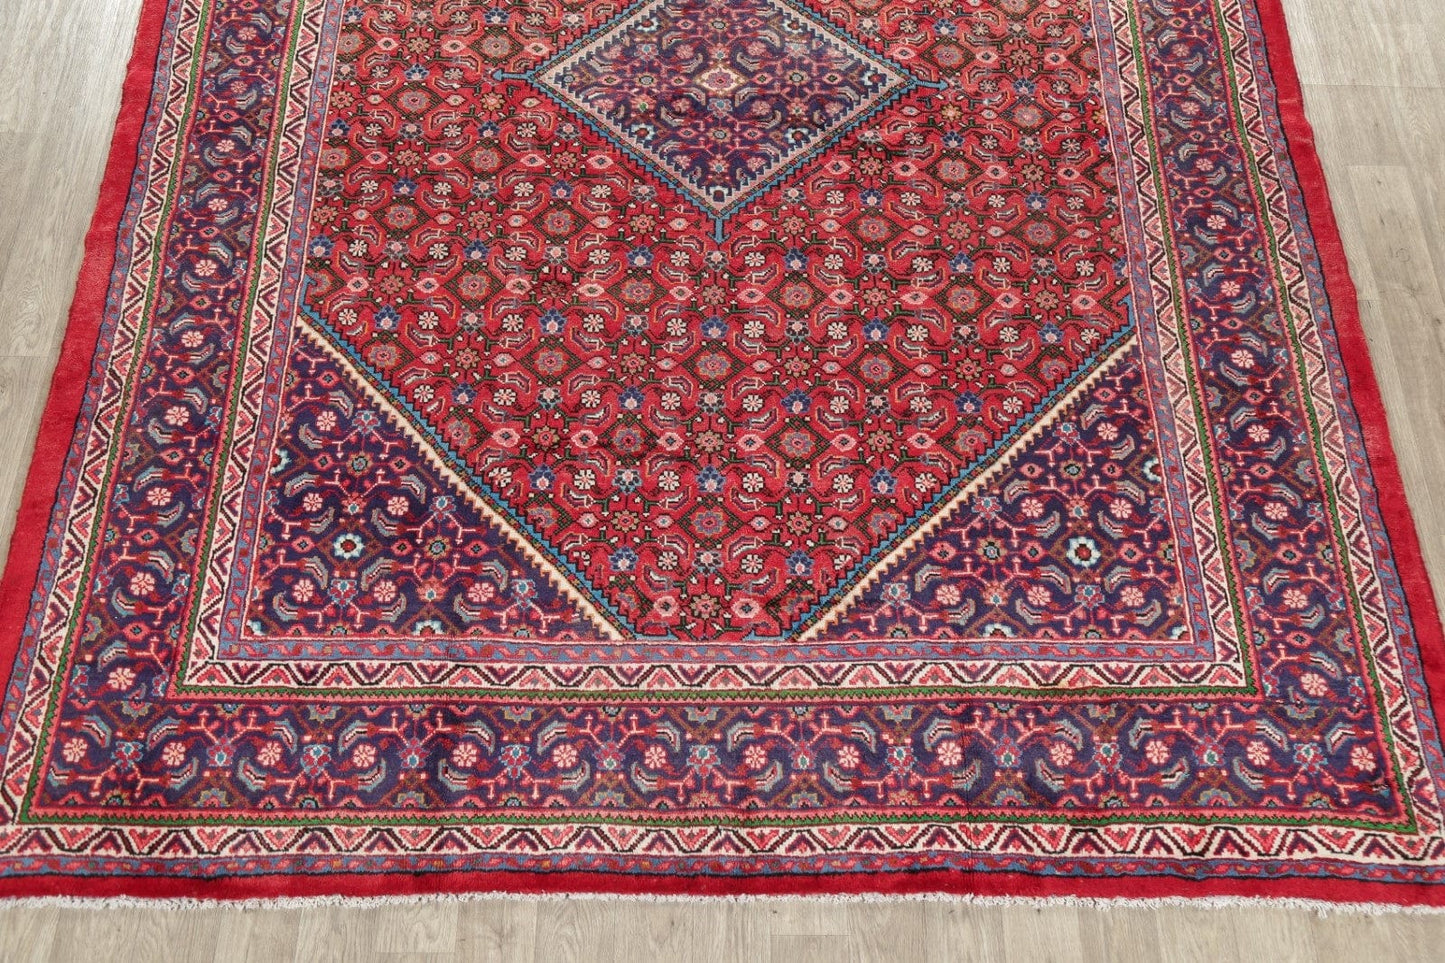 Vintage Geometric Red Mahal Persian Area Rug 9x13